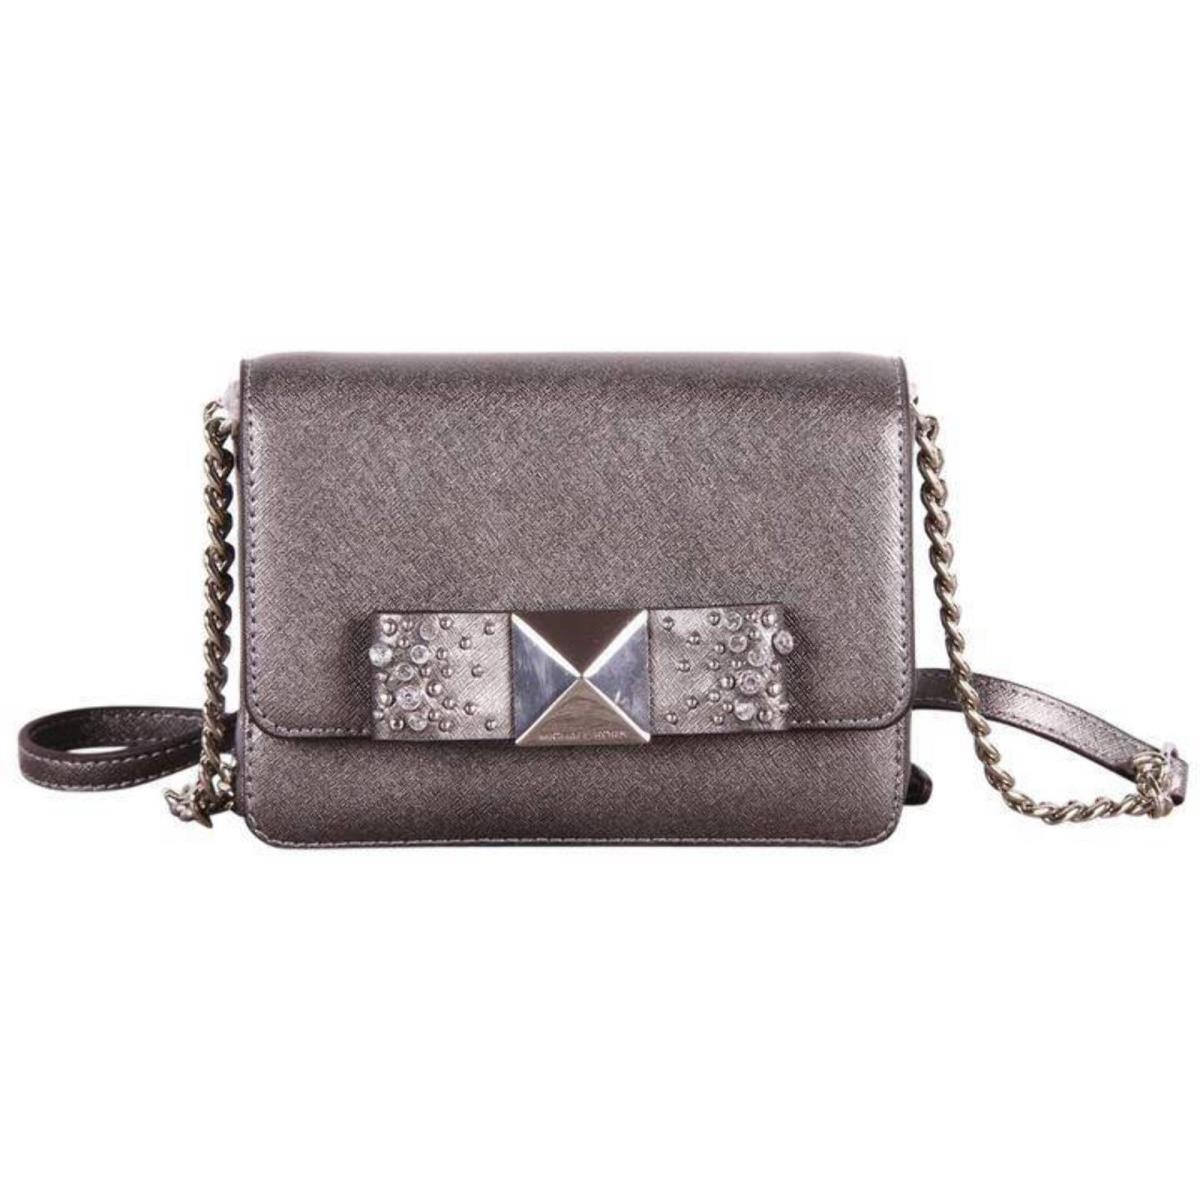 Michael Kors Tina Small Metallic Leather Clutch Crossbody Bag